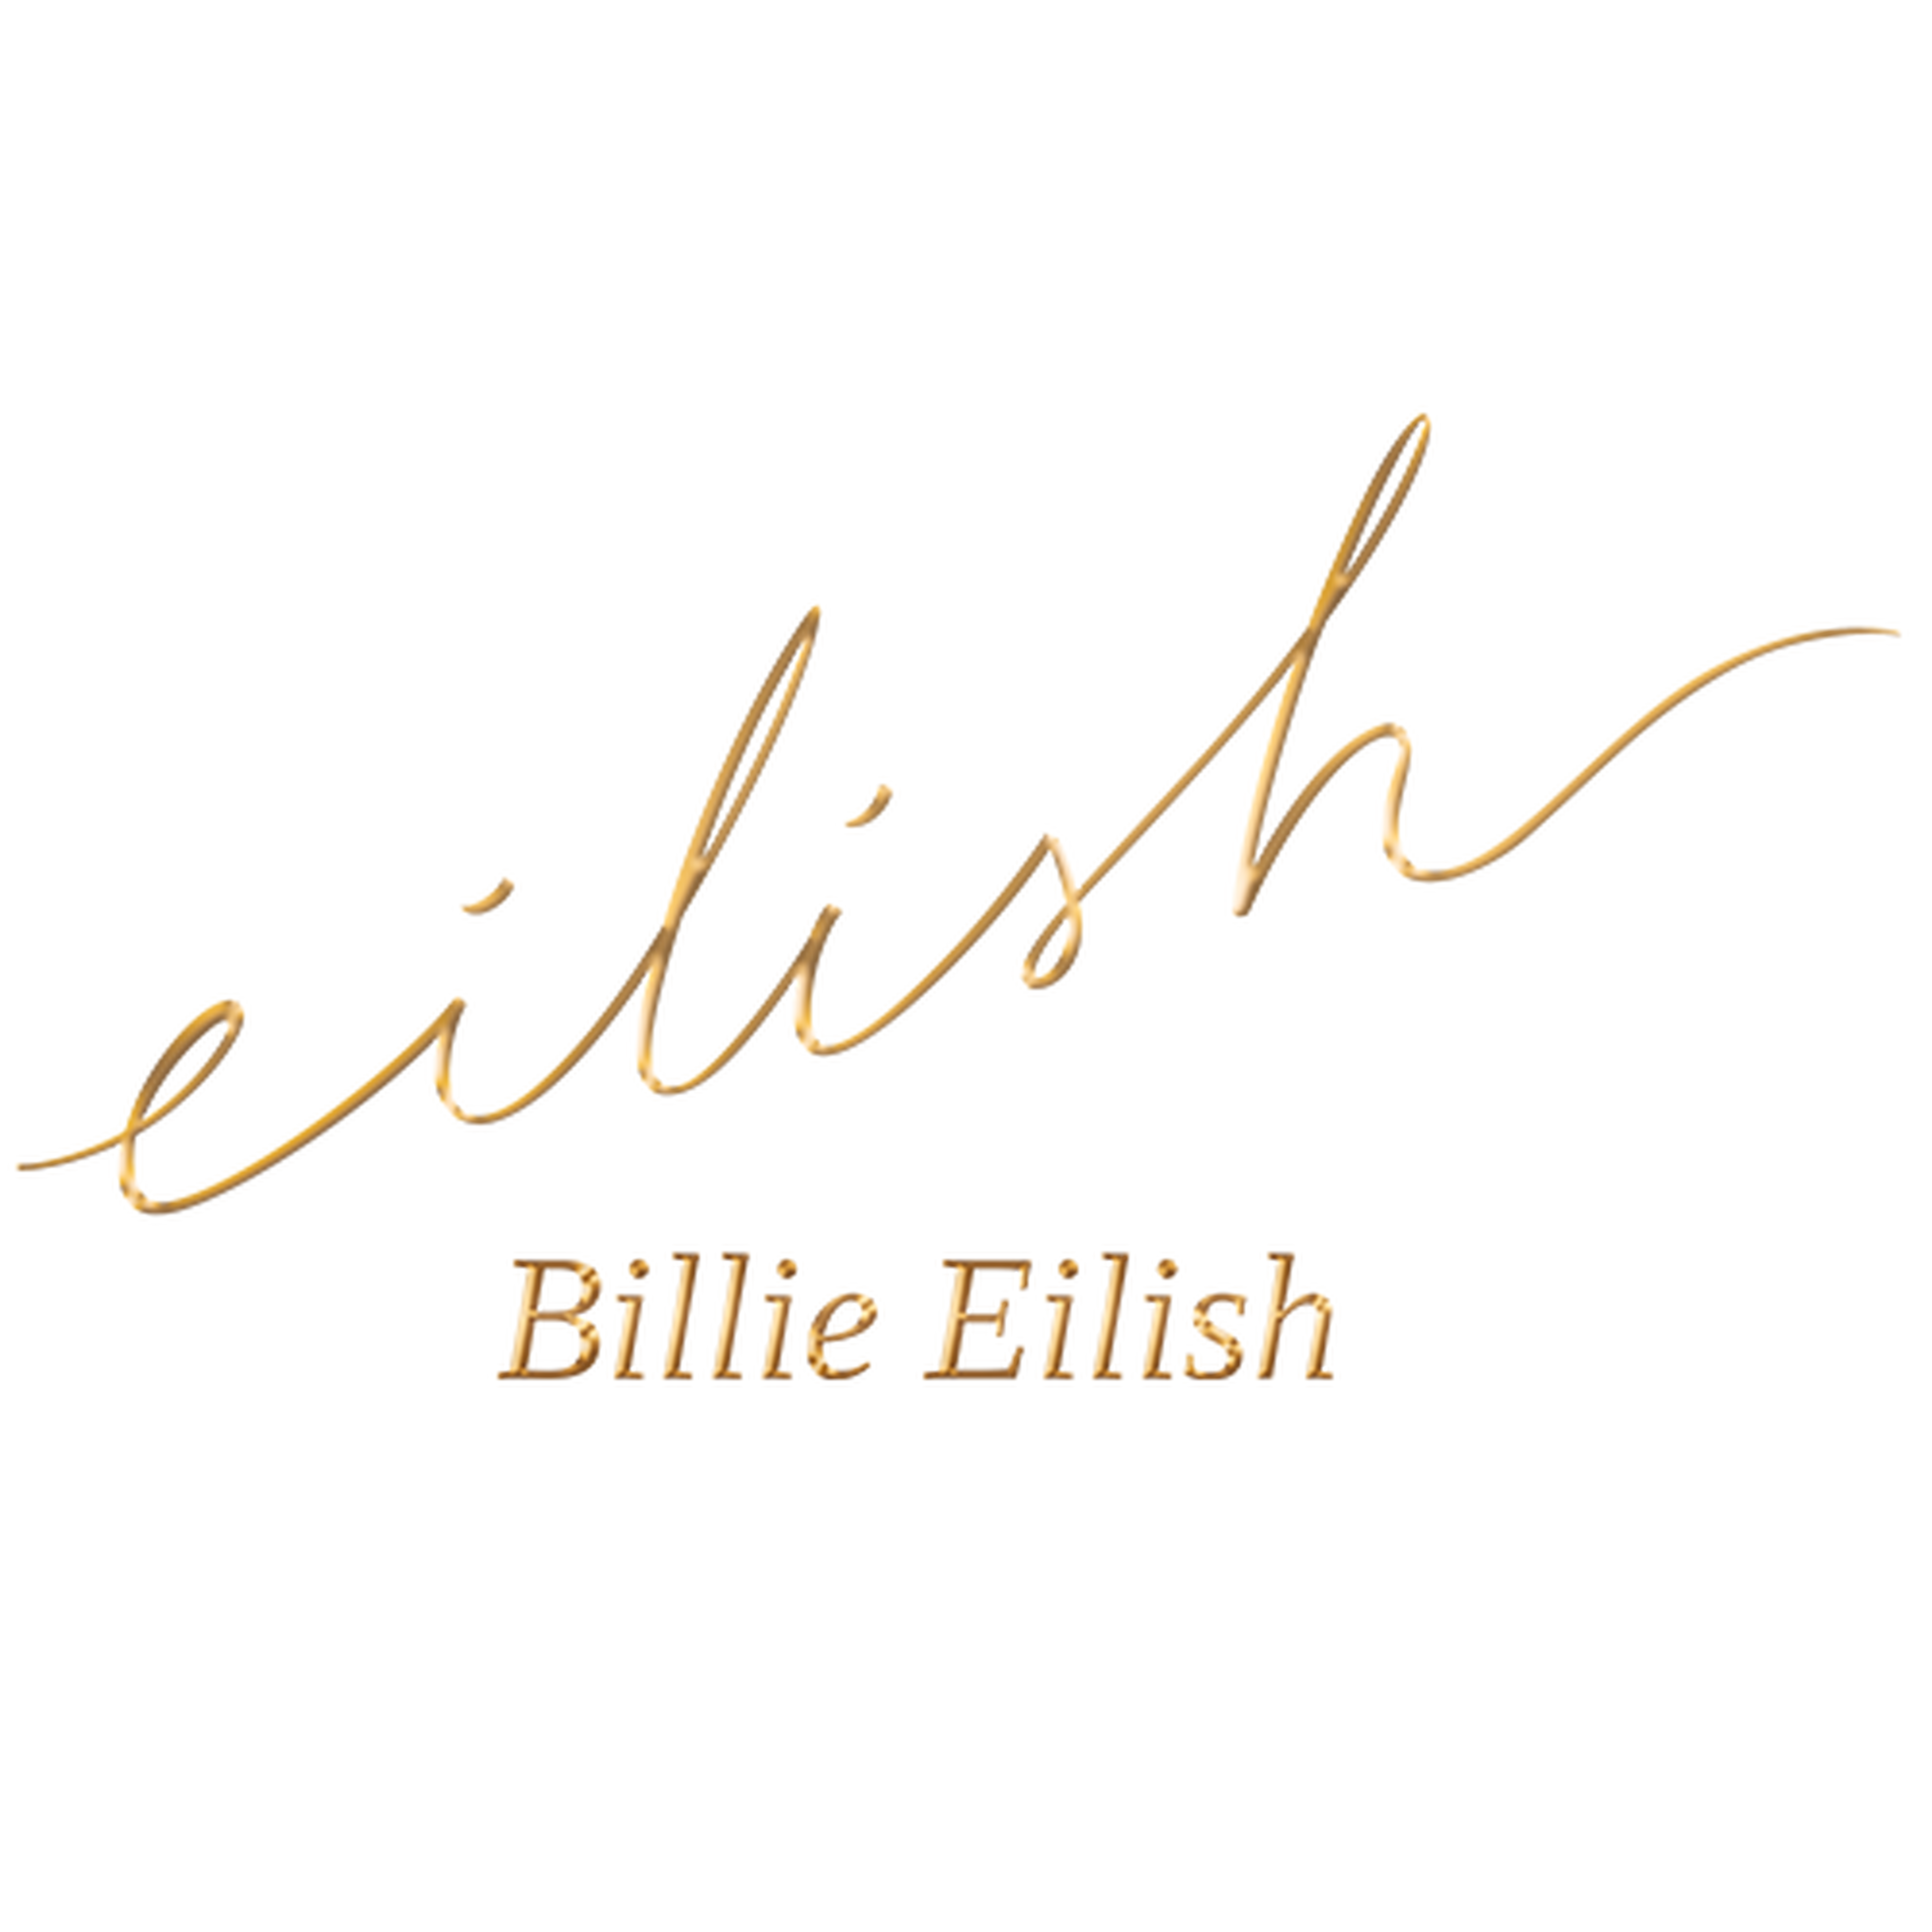 Billie Eilish logotype